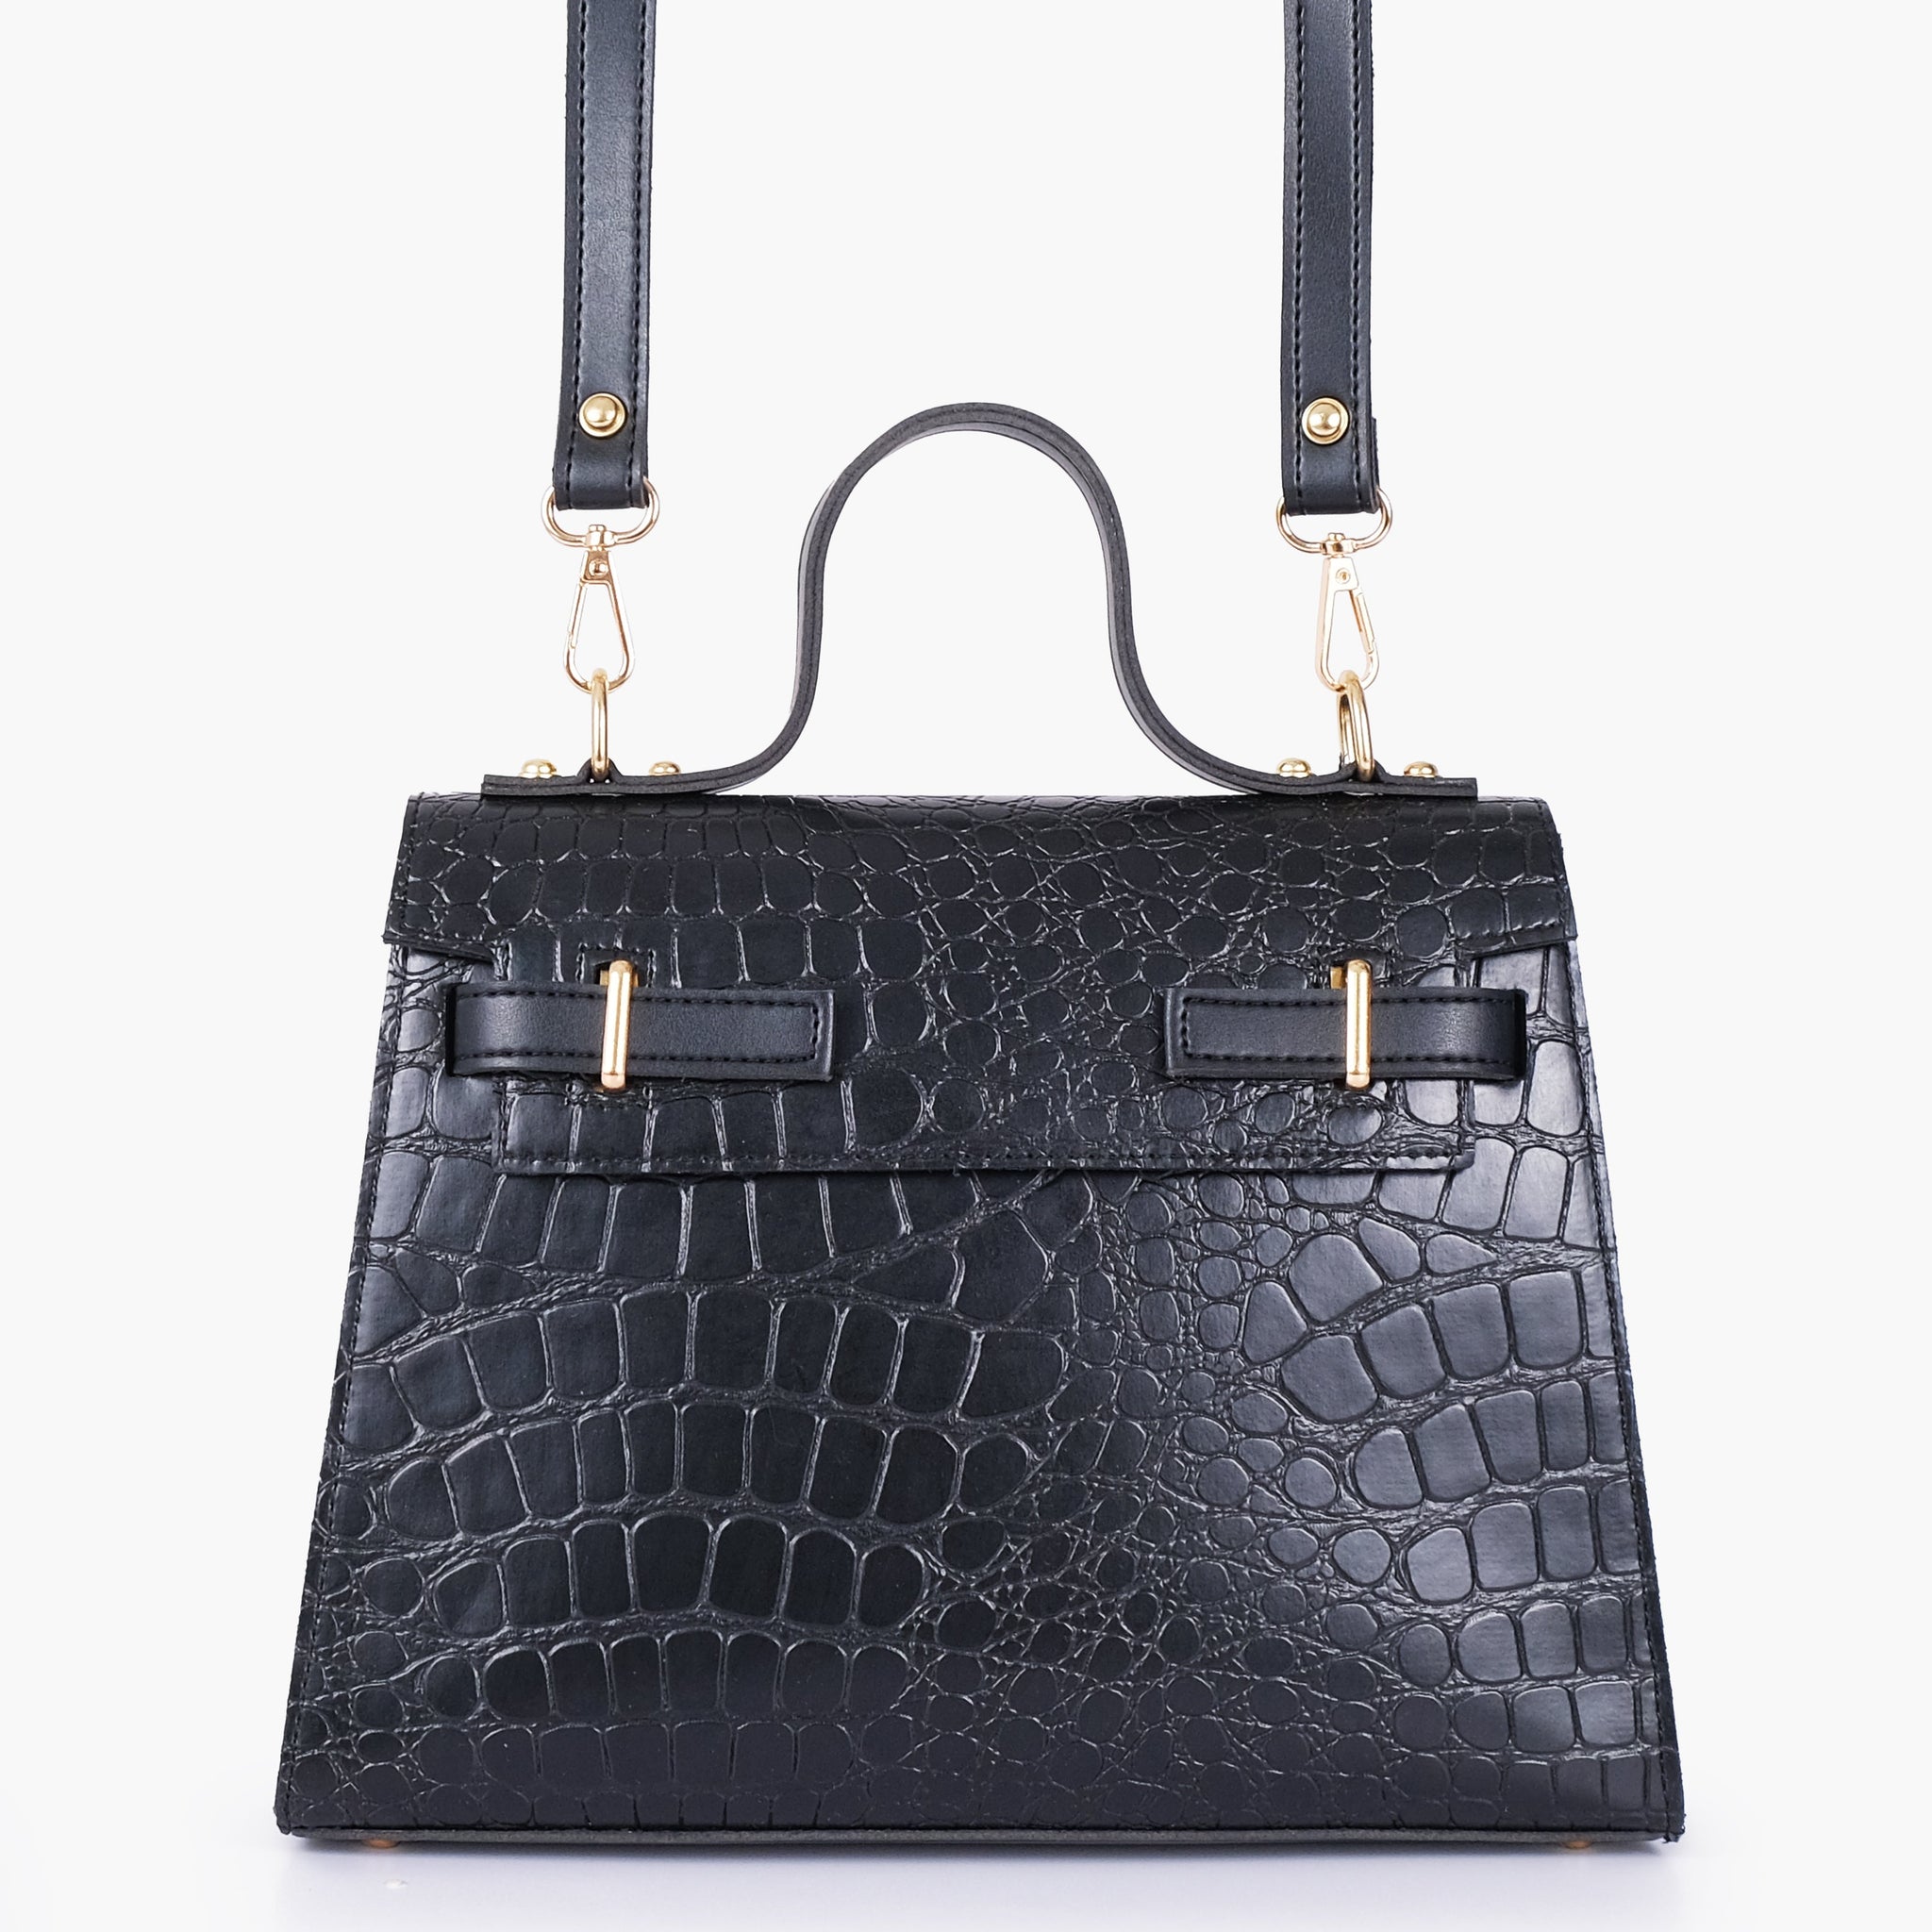 Buy Black Crocodile Cross Body Bag With Top Handle - Black in Pakistan